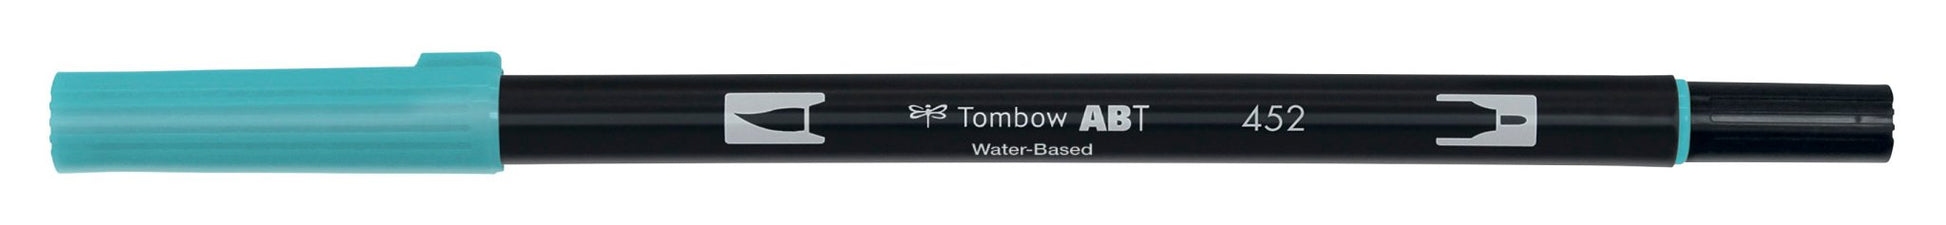 Tombow ABT dual brush pen - single colours - Tombow - Process blue ABT-452 - millenotes